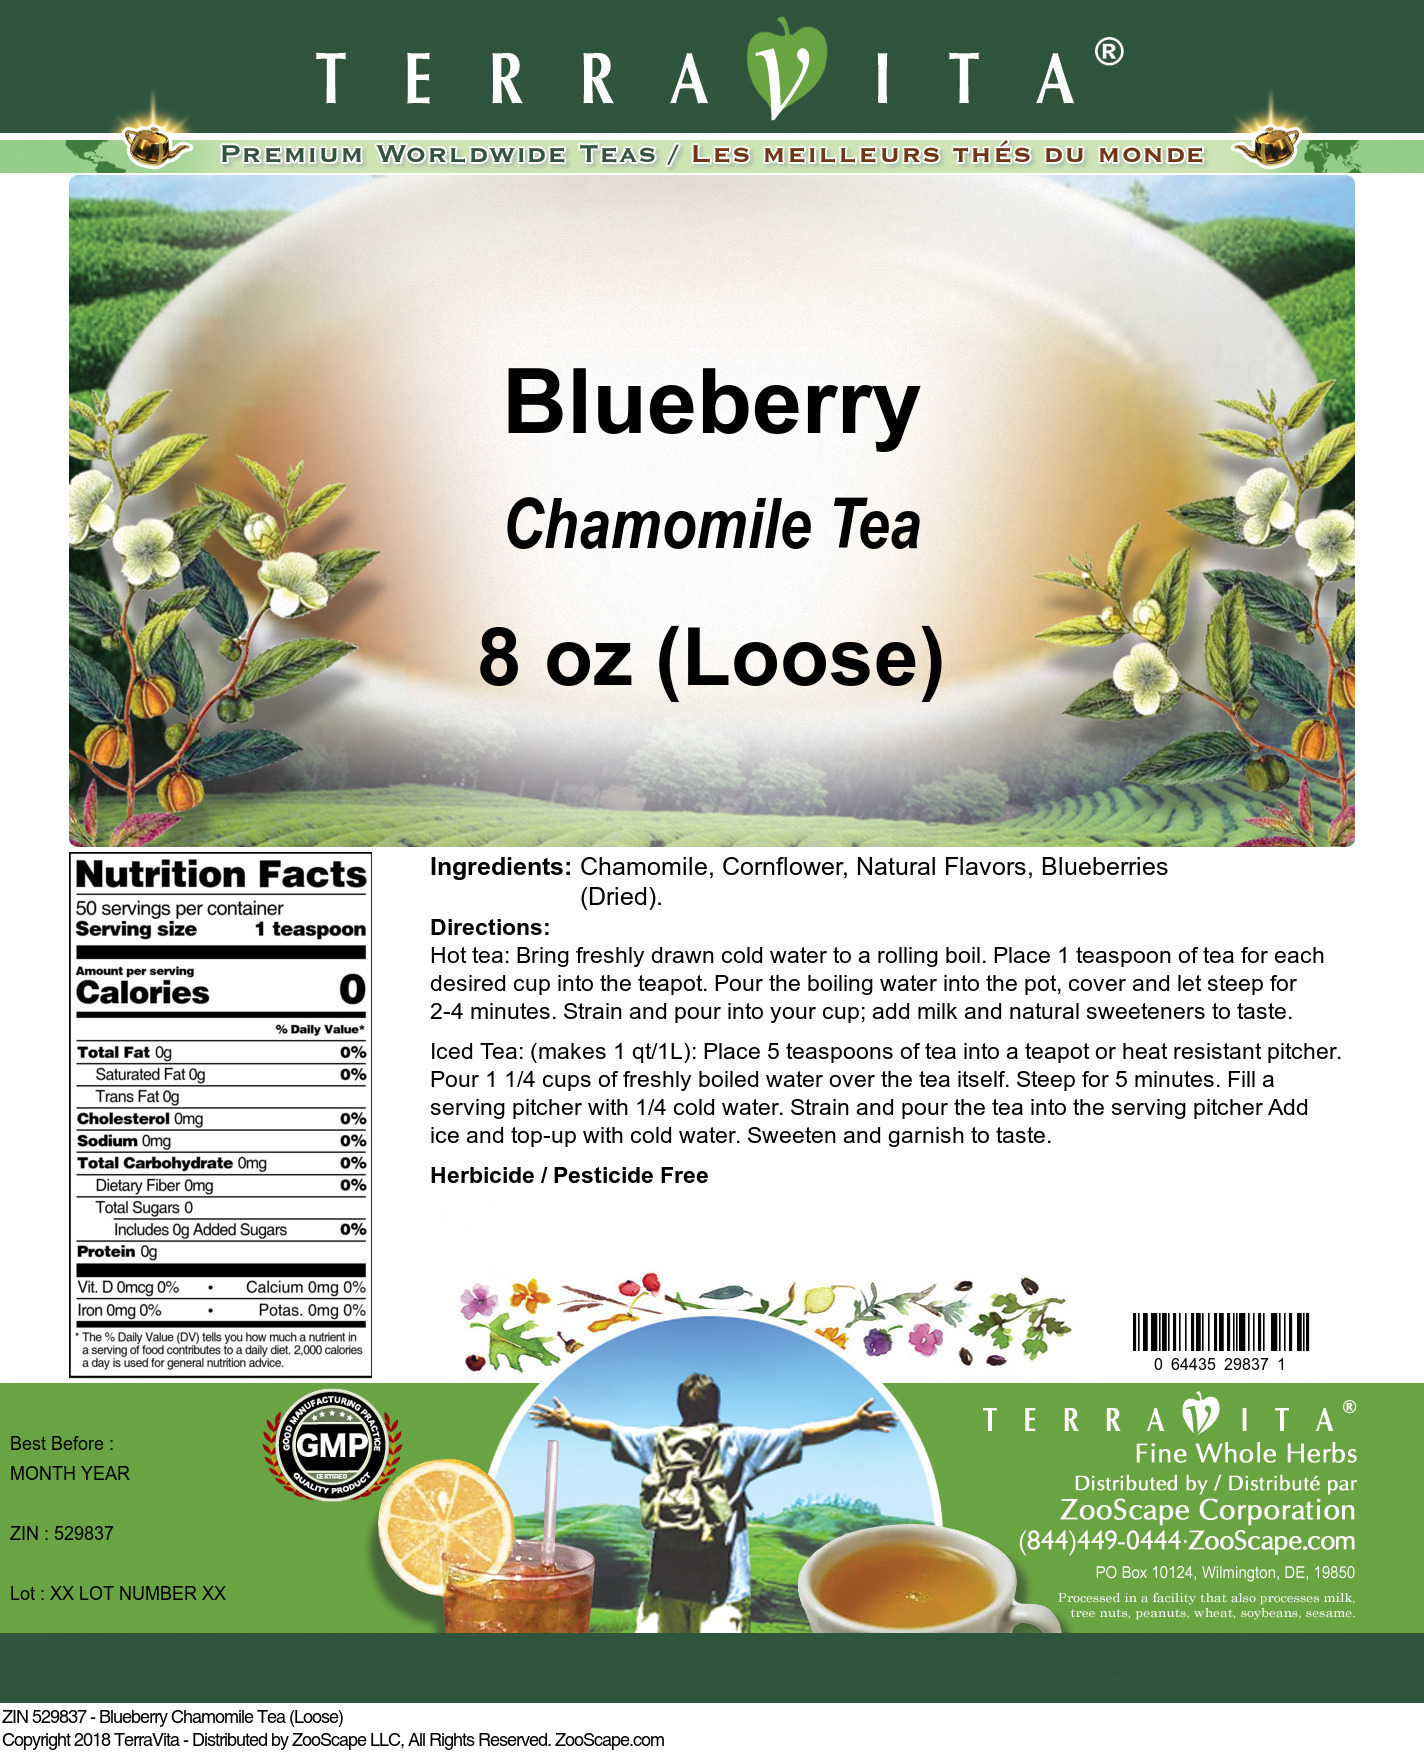 Blueberry Chamomile Tea (Loose) - Label